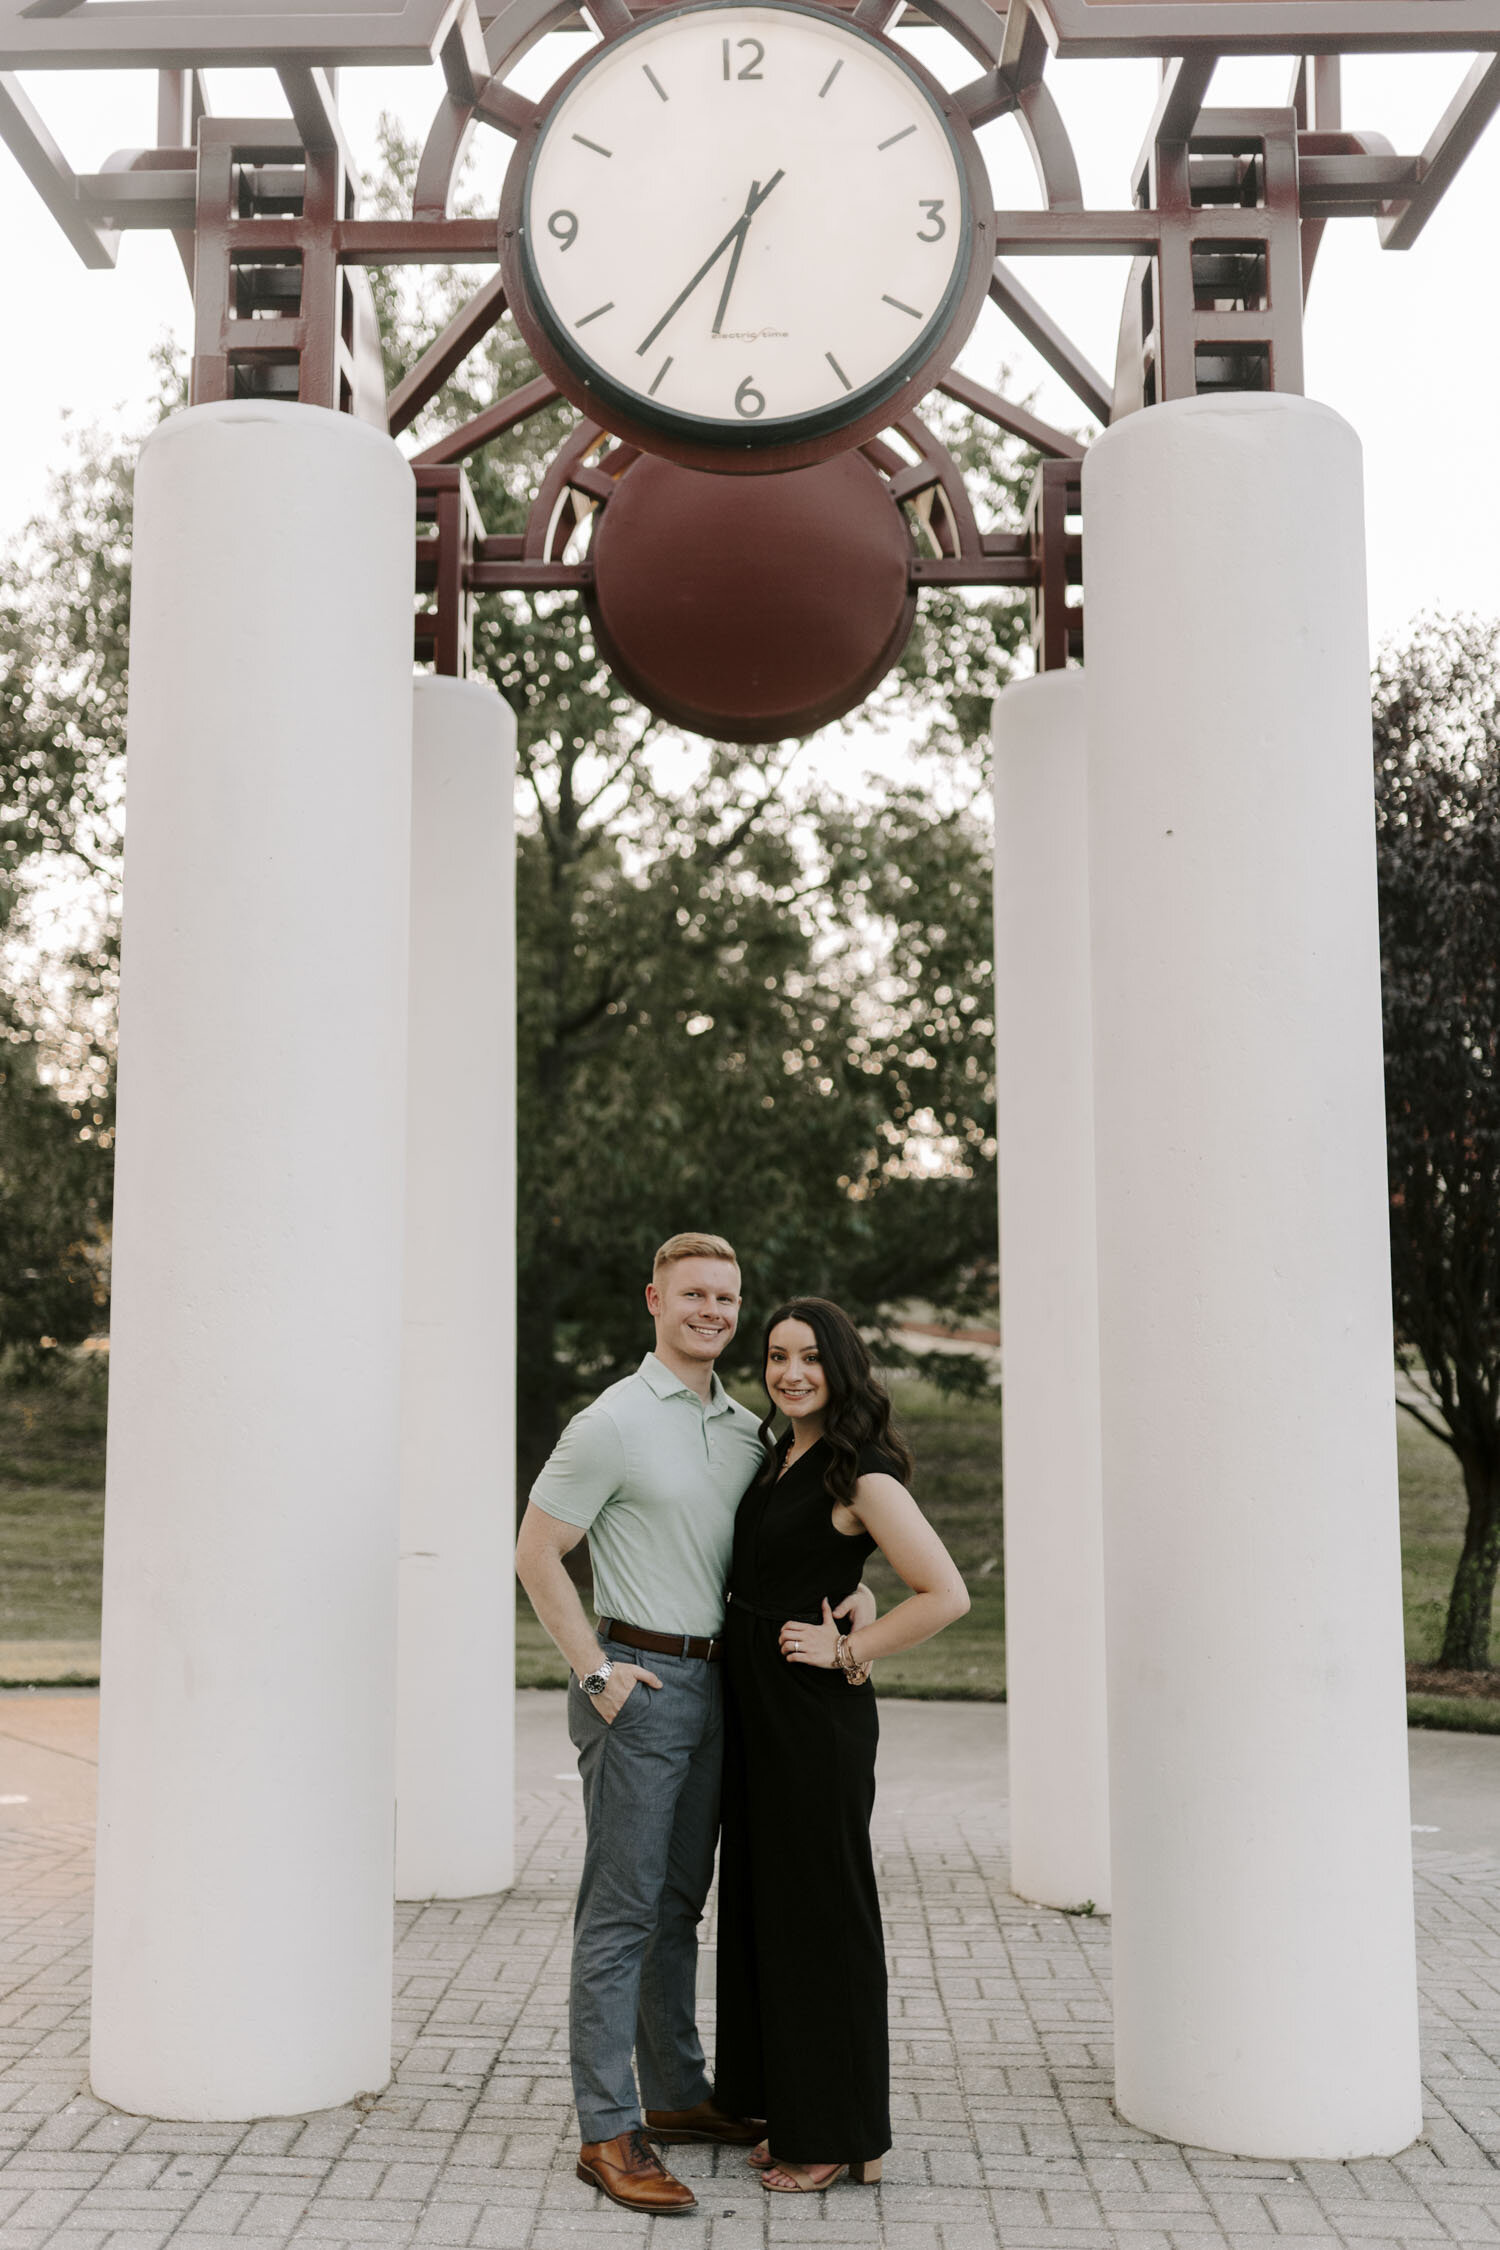 UNCG Engagement Session by Kayli LaFon Photography | Greensboro Winston-Salem, NC Wedding & Elopement Photographer